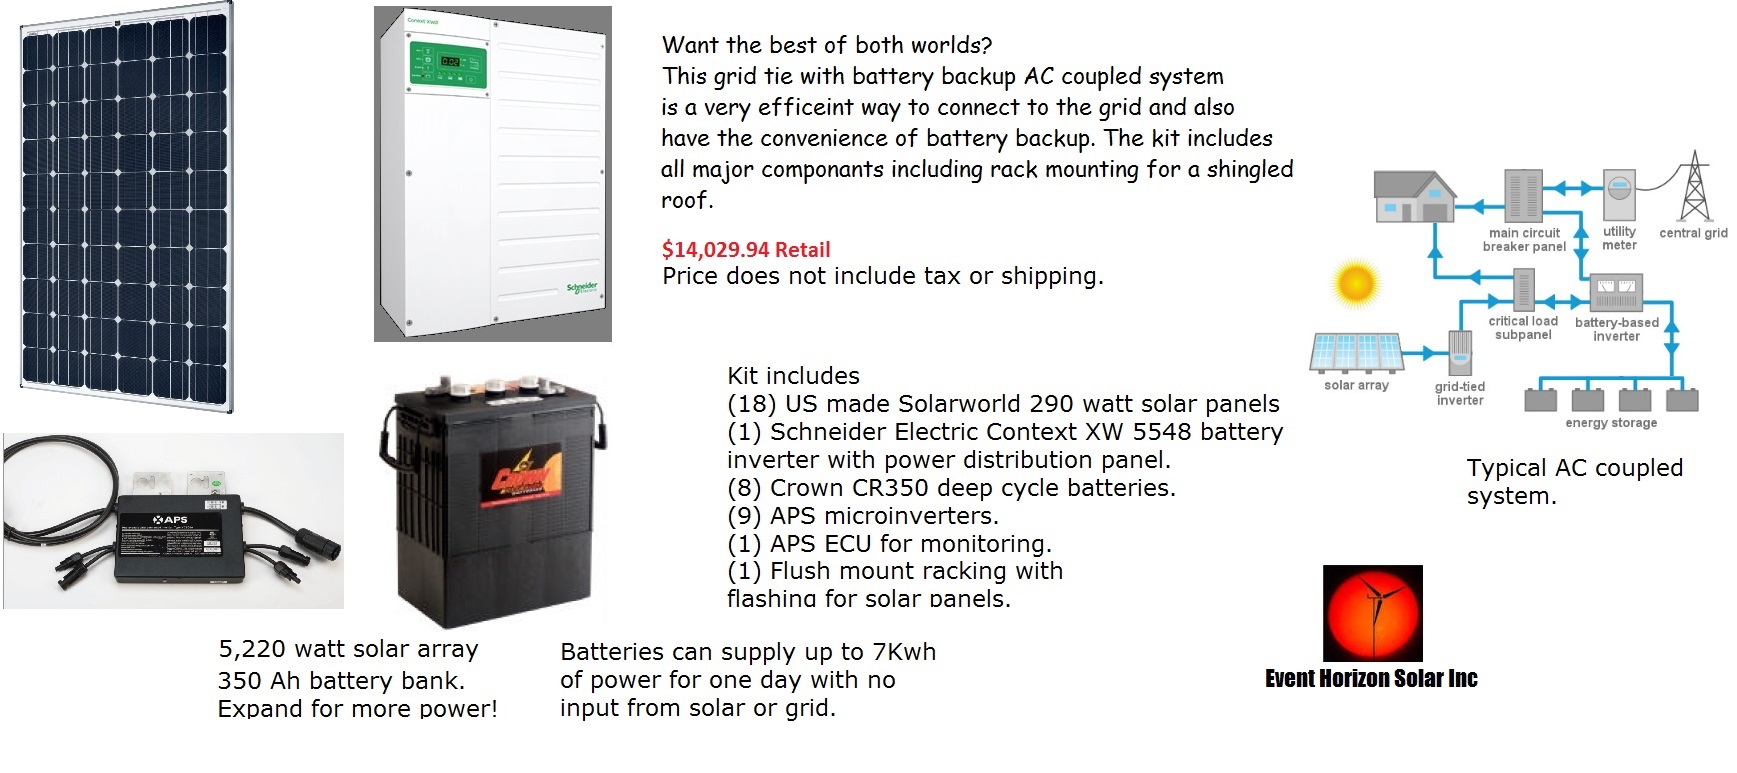 AC coupled solar kit